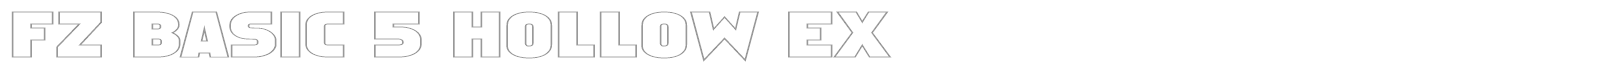 FZ BASIC 5 HOLLOW EX font preview